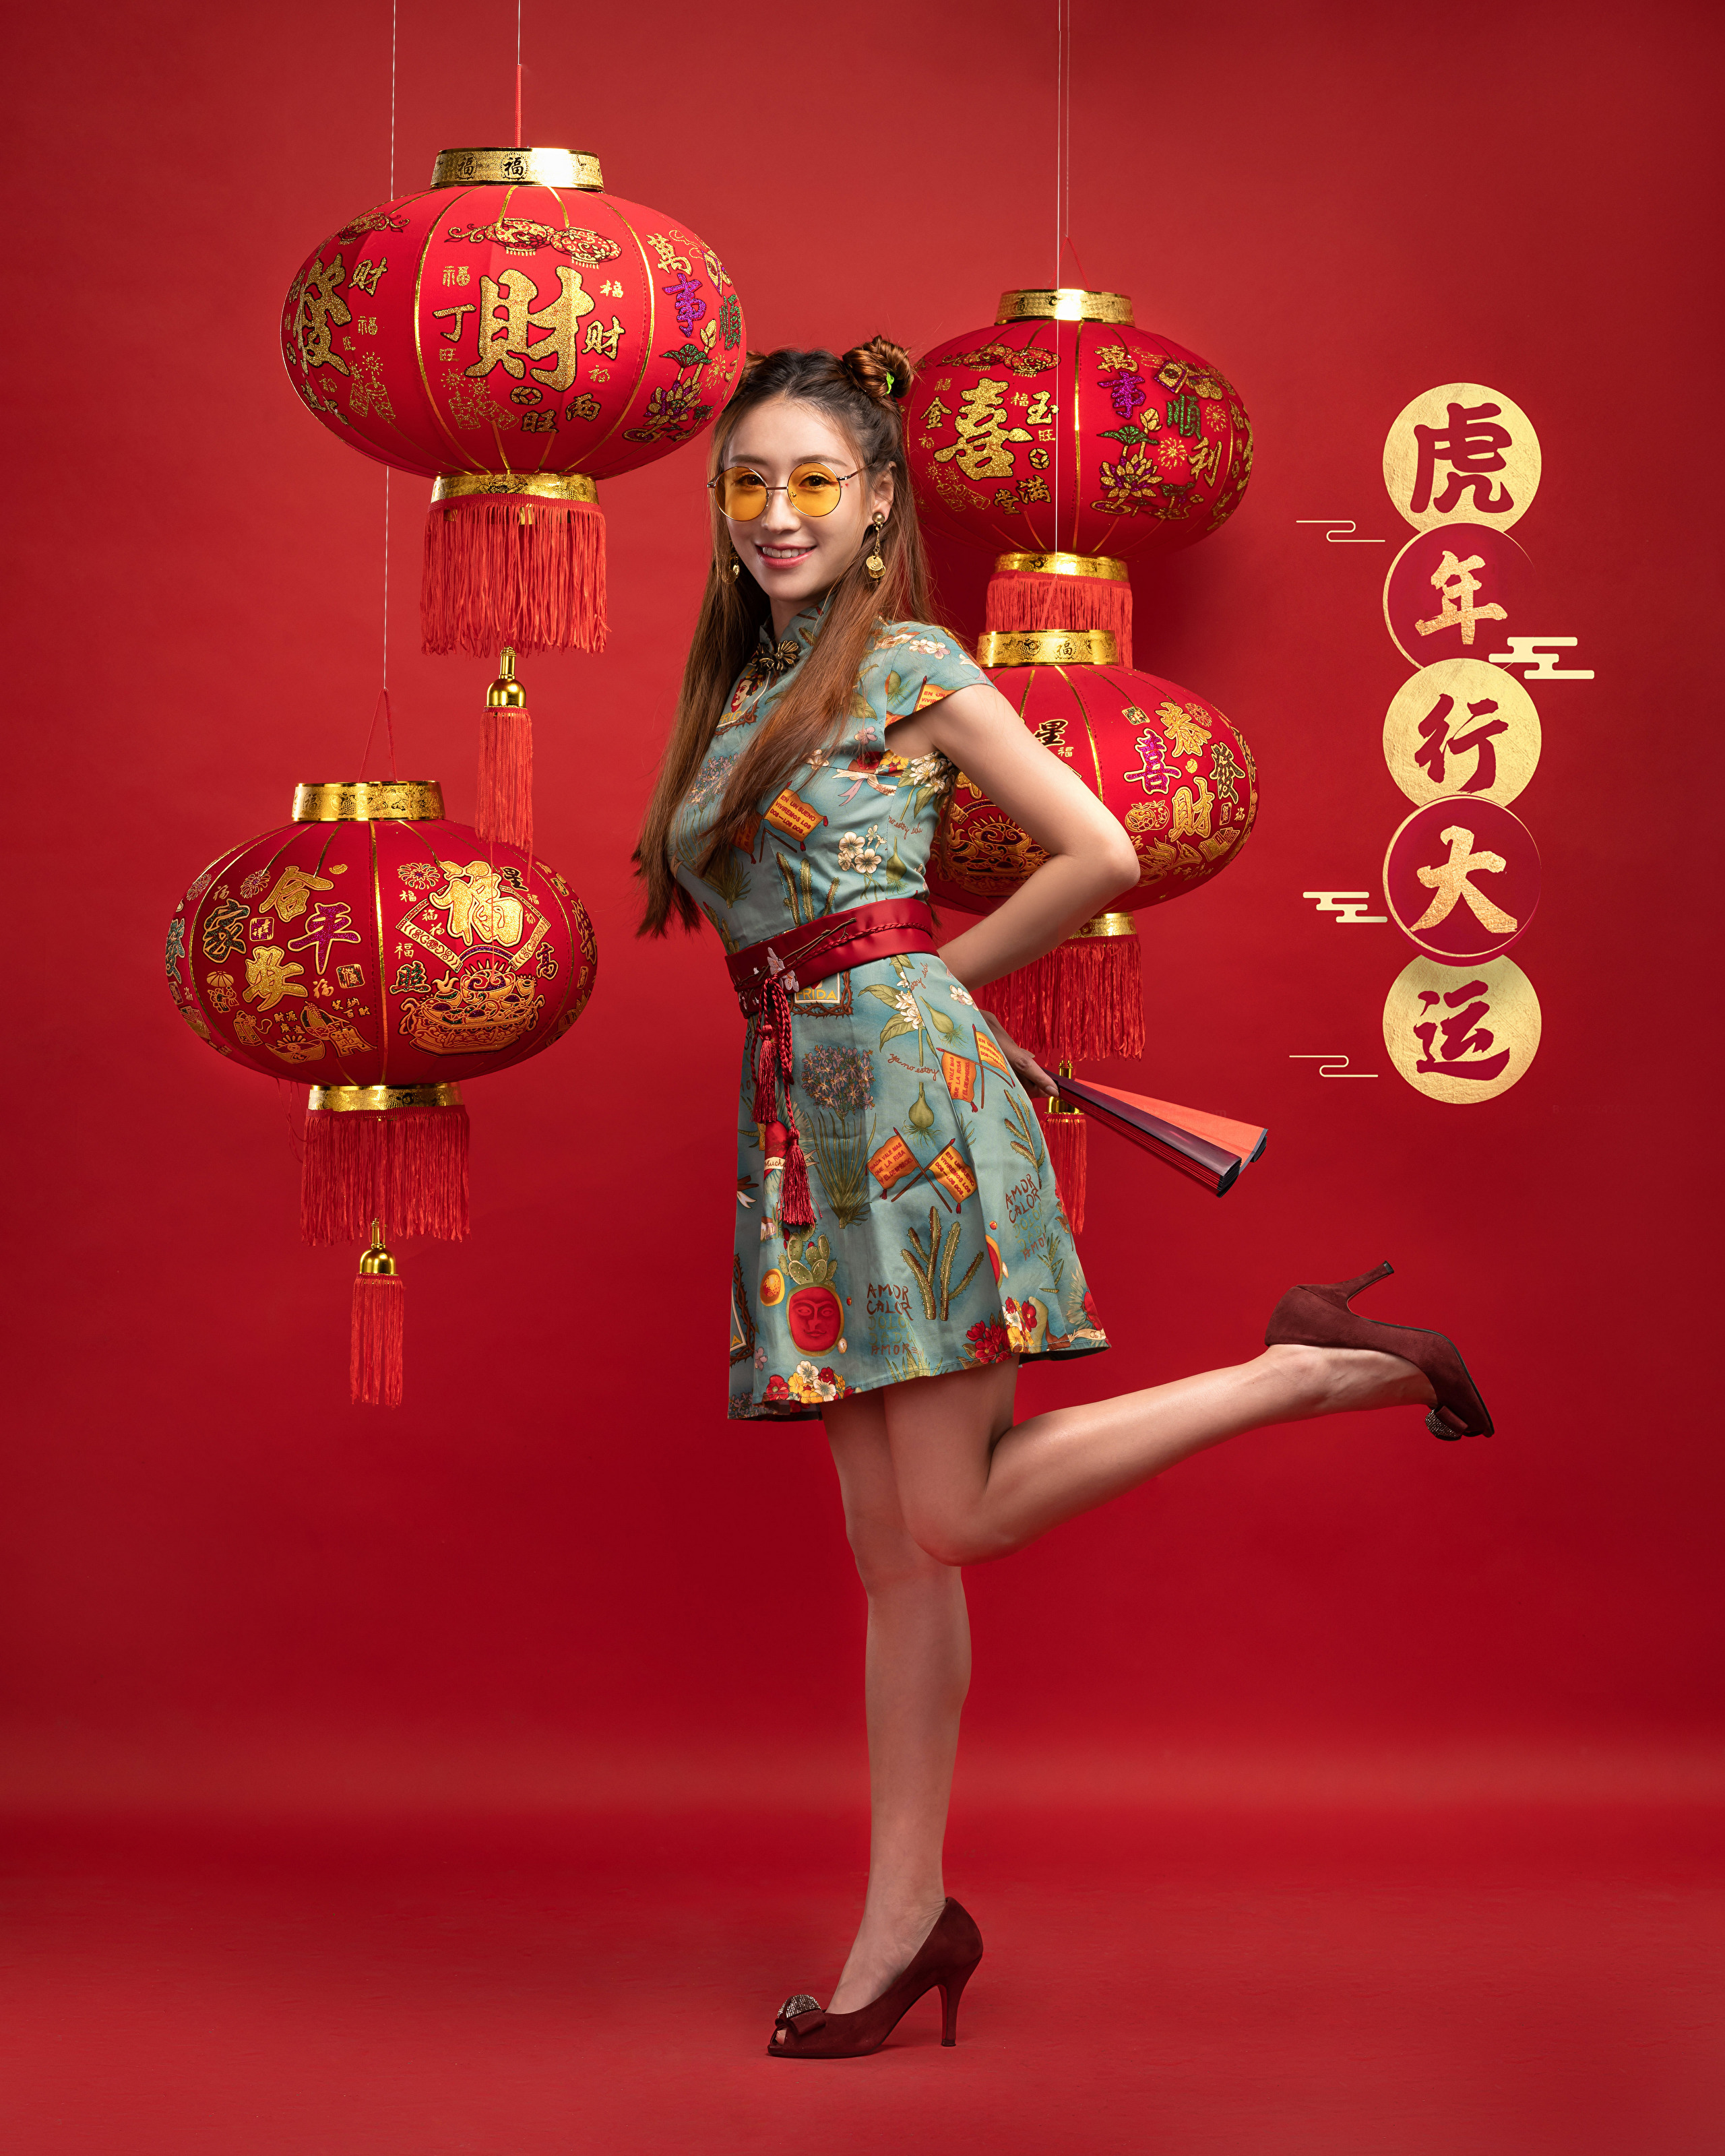 Asian Model Women Long Hair Dark Hair Chinese Lantern Red Background Hand Fan Sunglasses Earring Twi 2560x3200